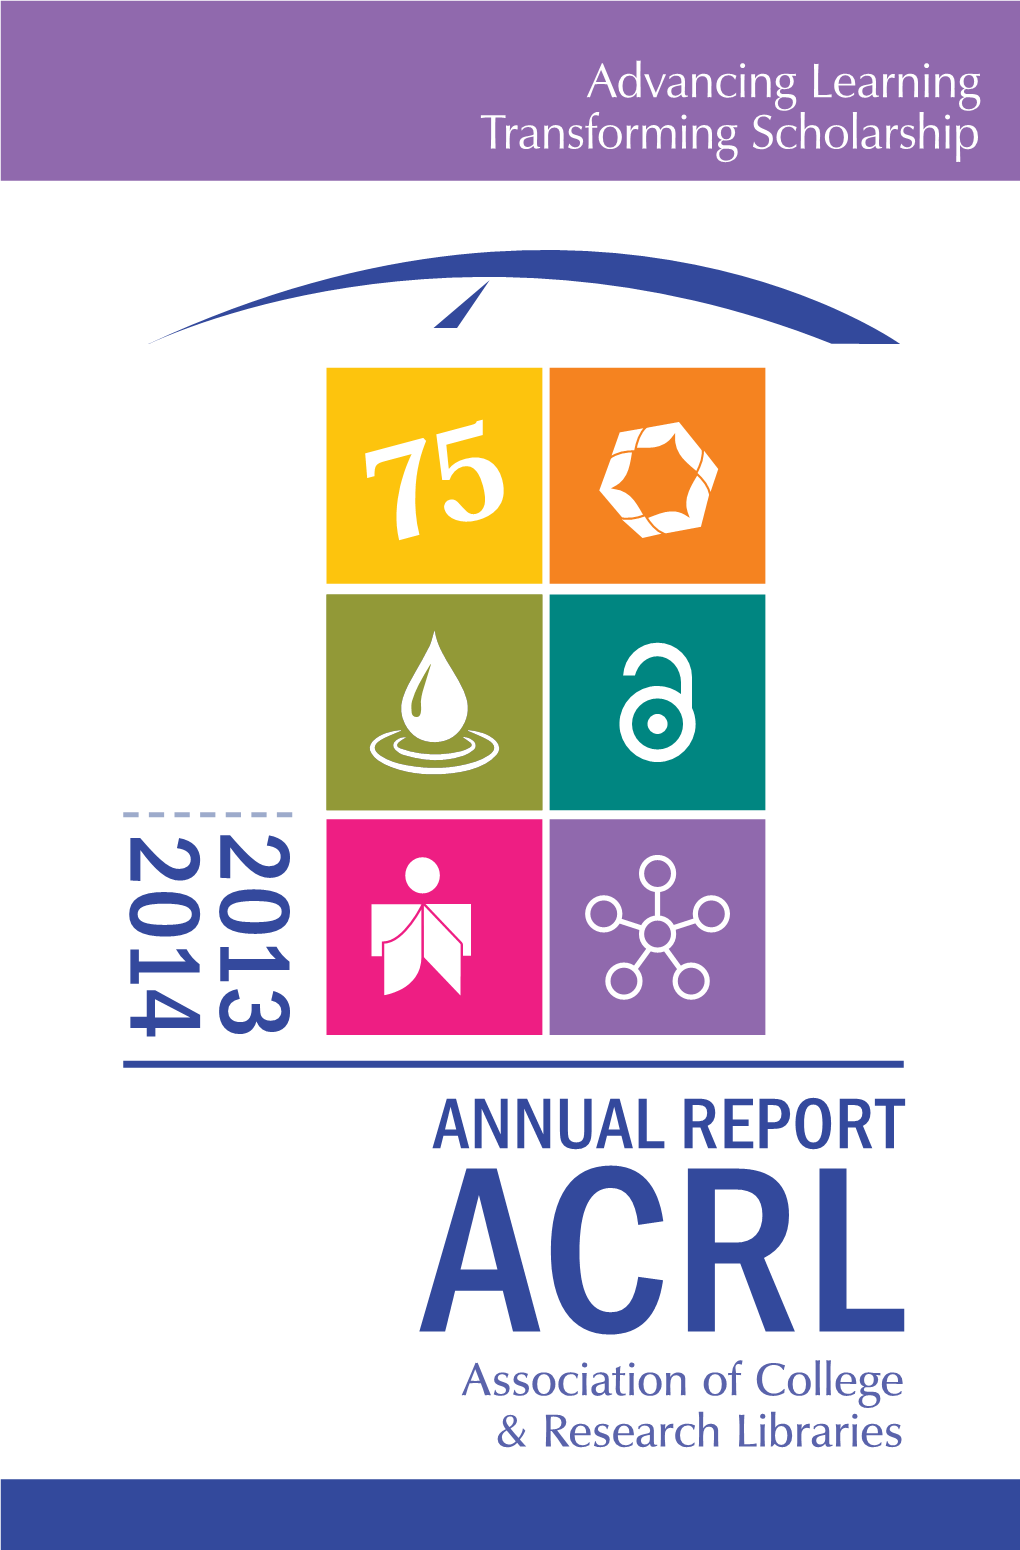 Annual Report Annual Acrl